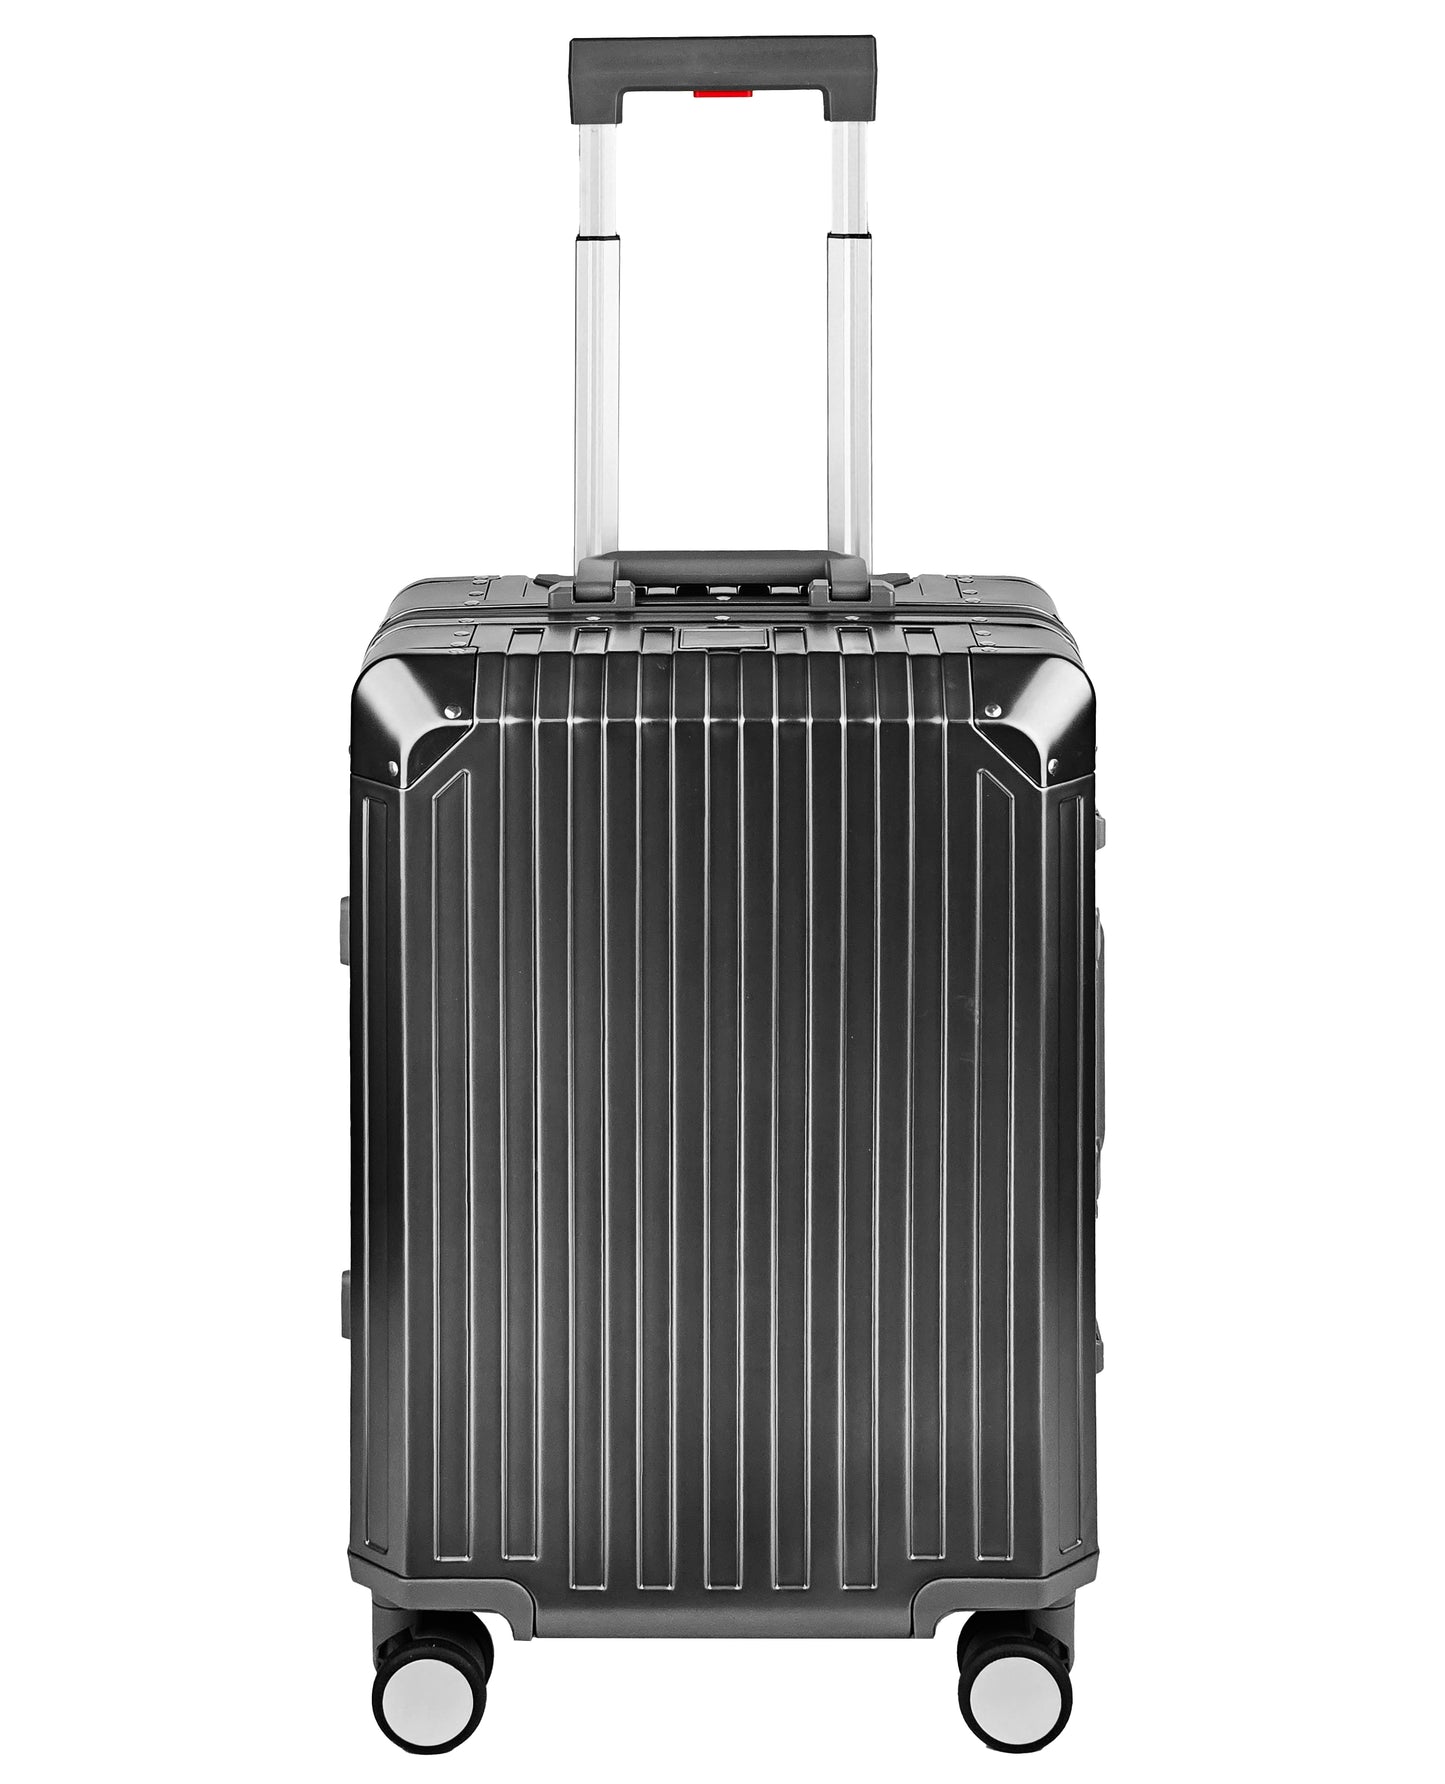 GLX2 All Aluminum Luggage 3 Sizes (20",26",28") with TSA Lock Gray